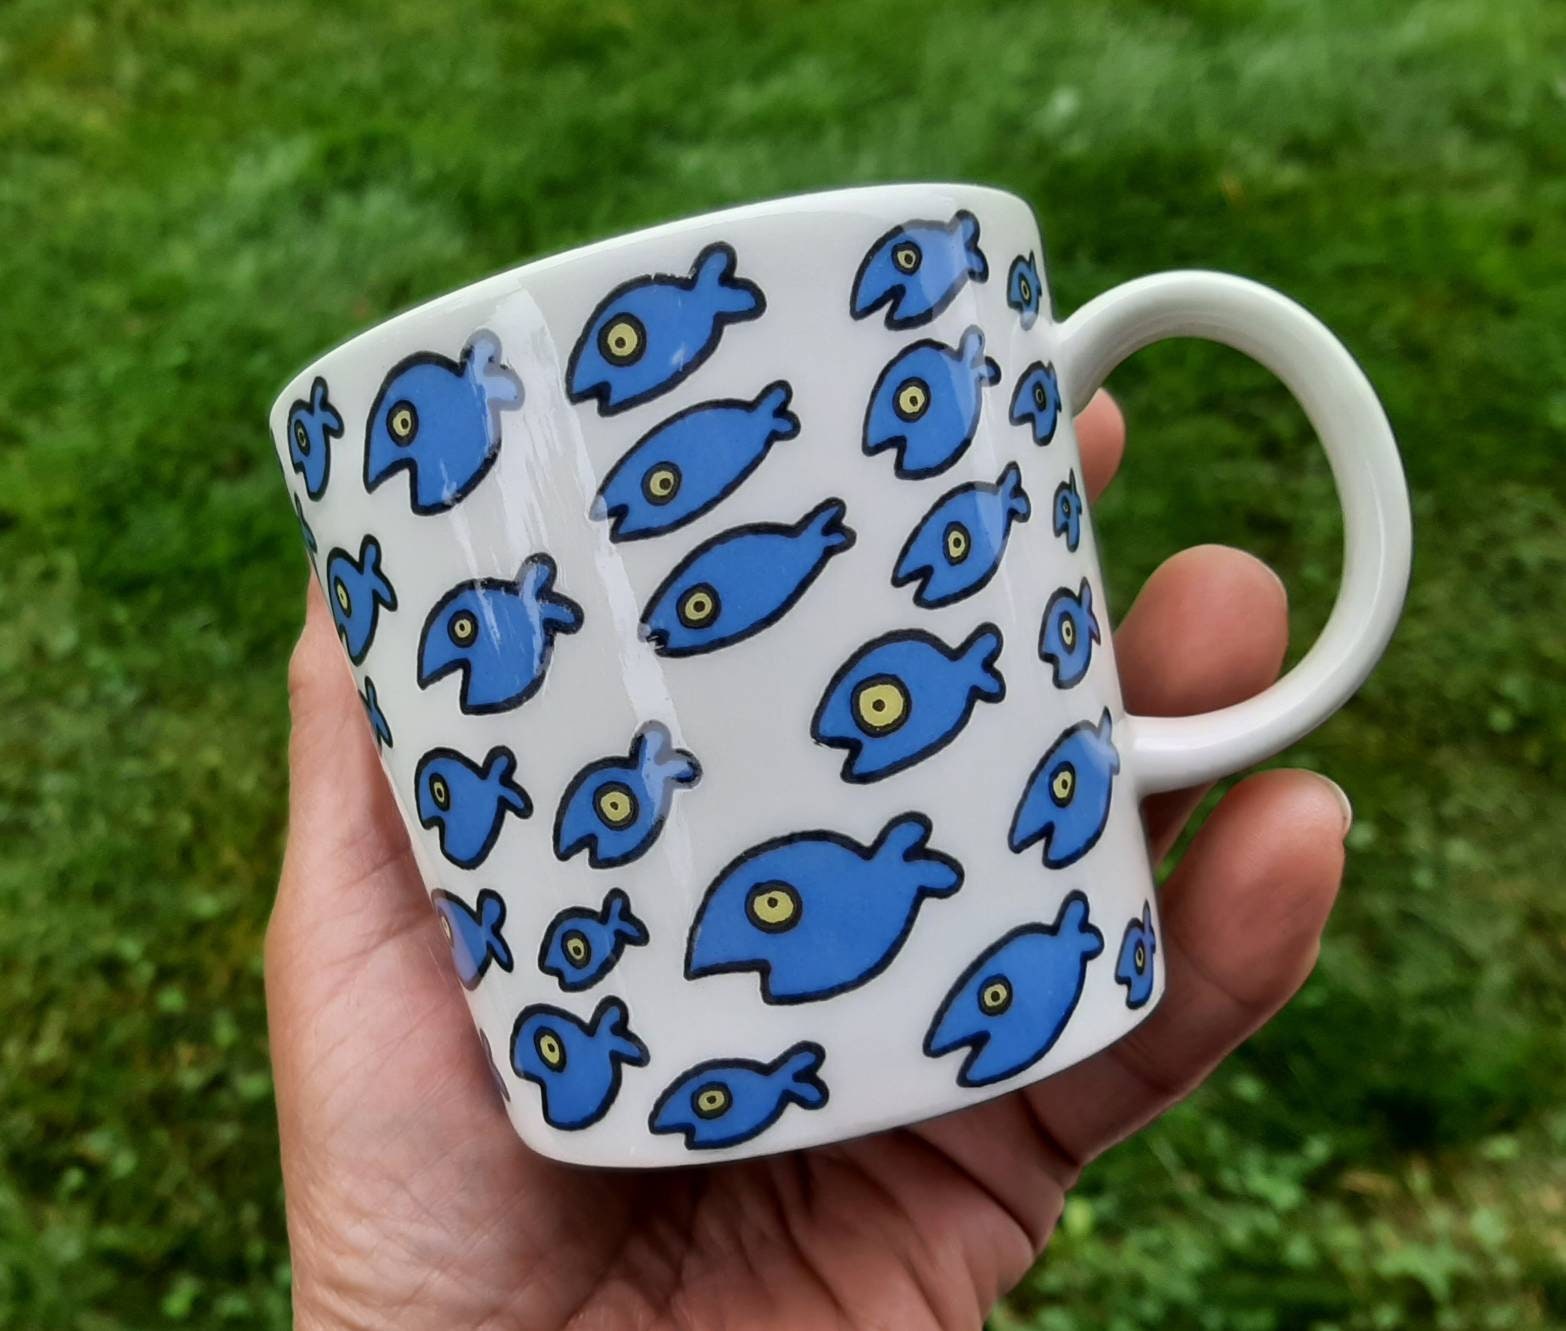 Arabia Finland Teema Mug With Blue Fishes Design Tony - Etsy